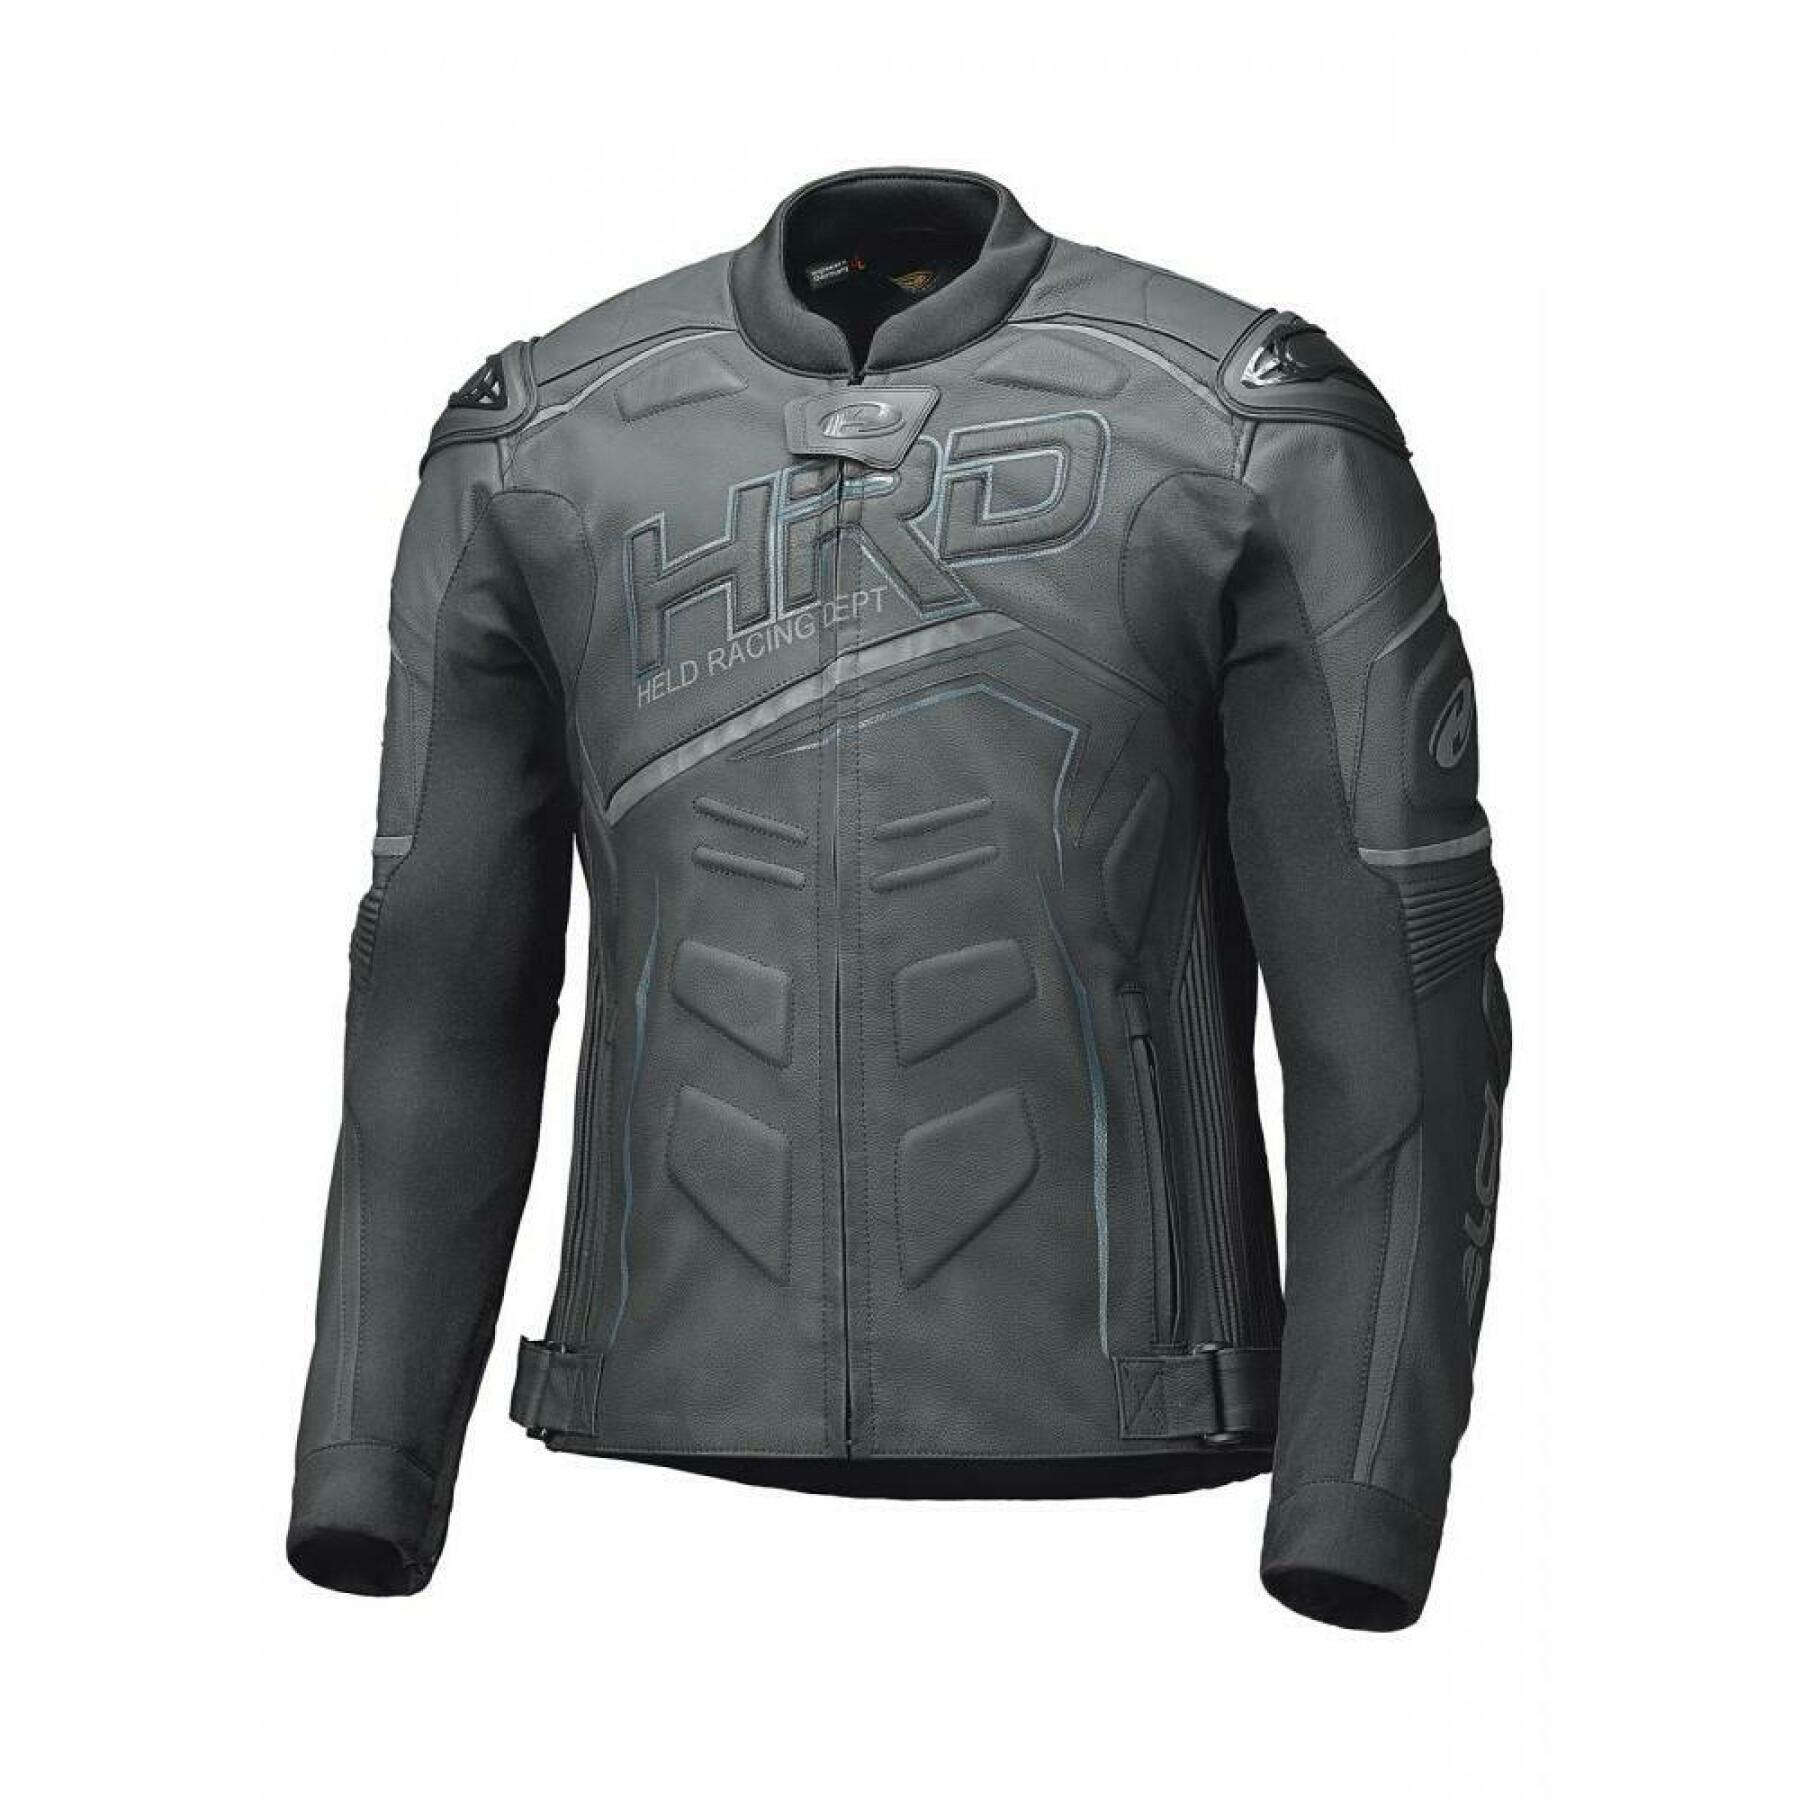 Leather motorcycle jacket Held safer II